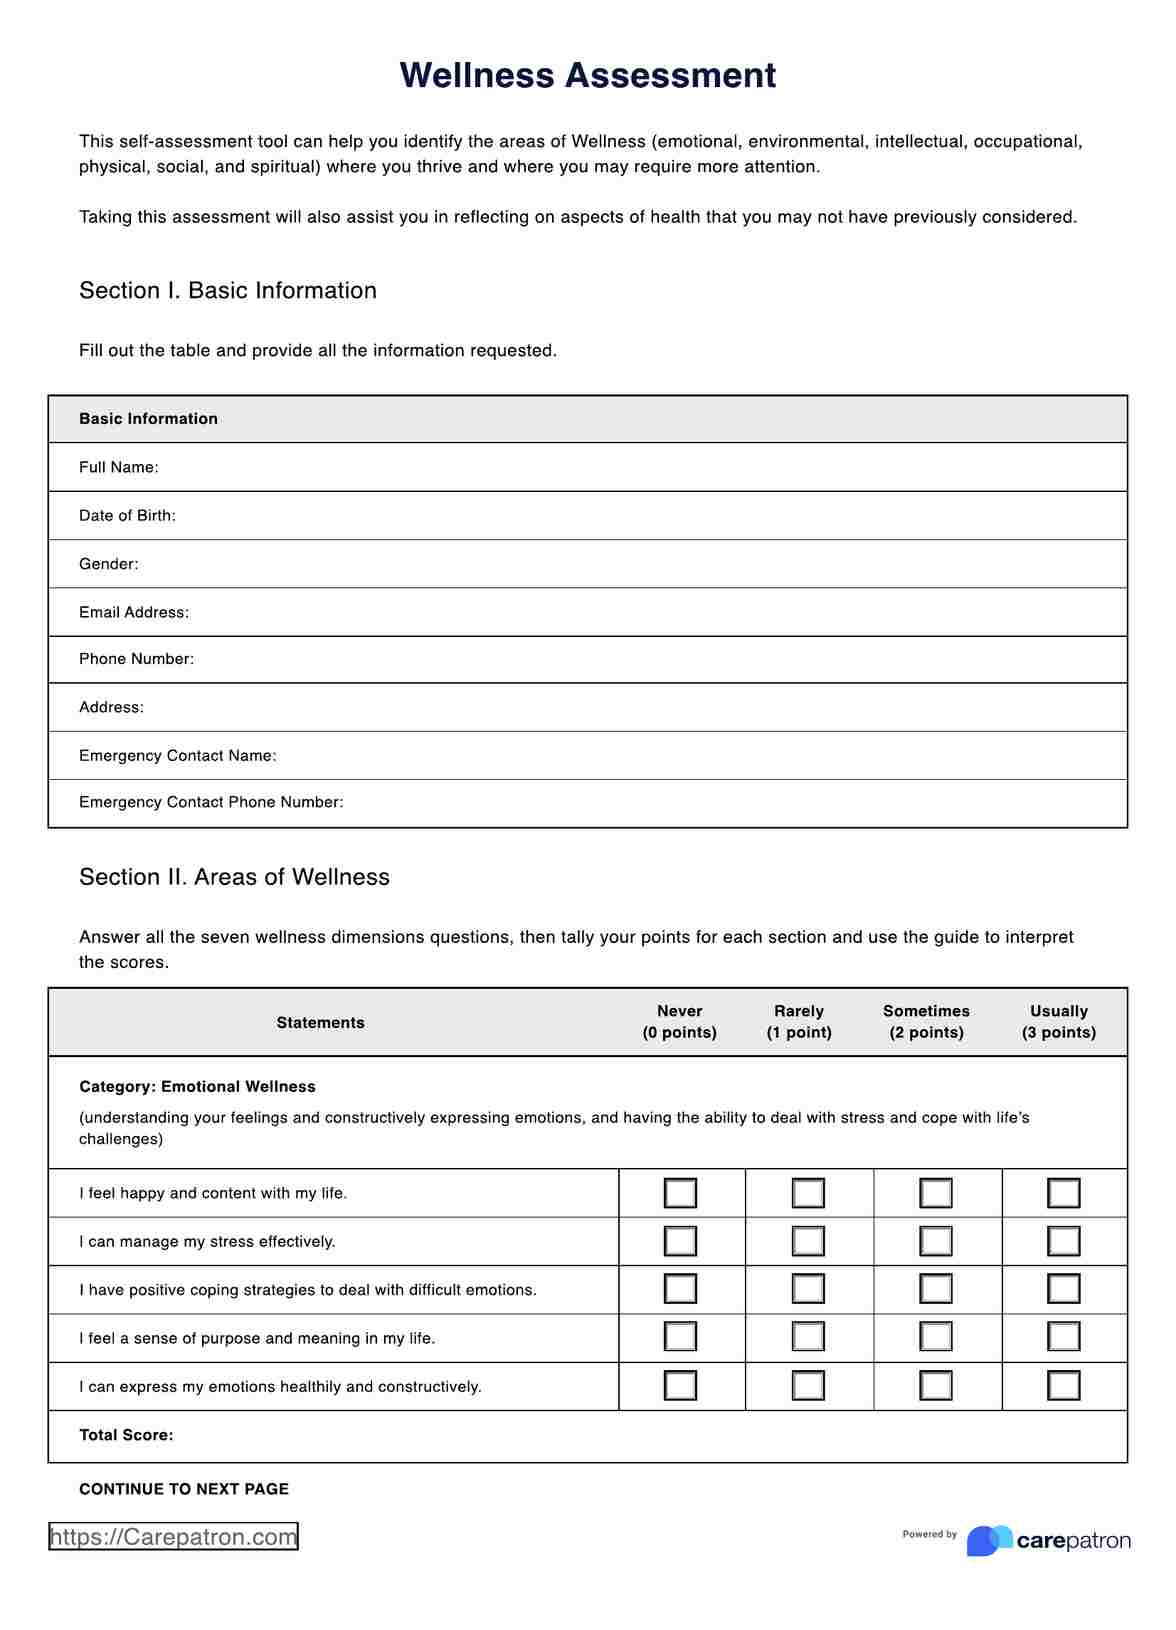 Wellness Assessment PDF Example